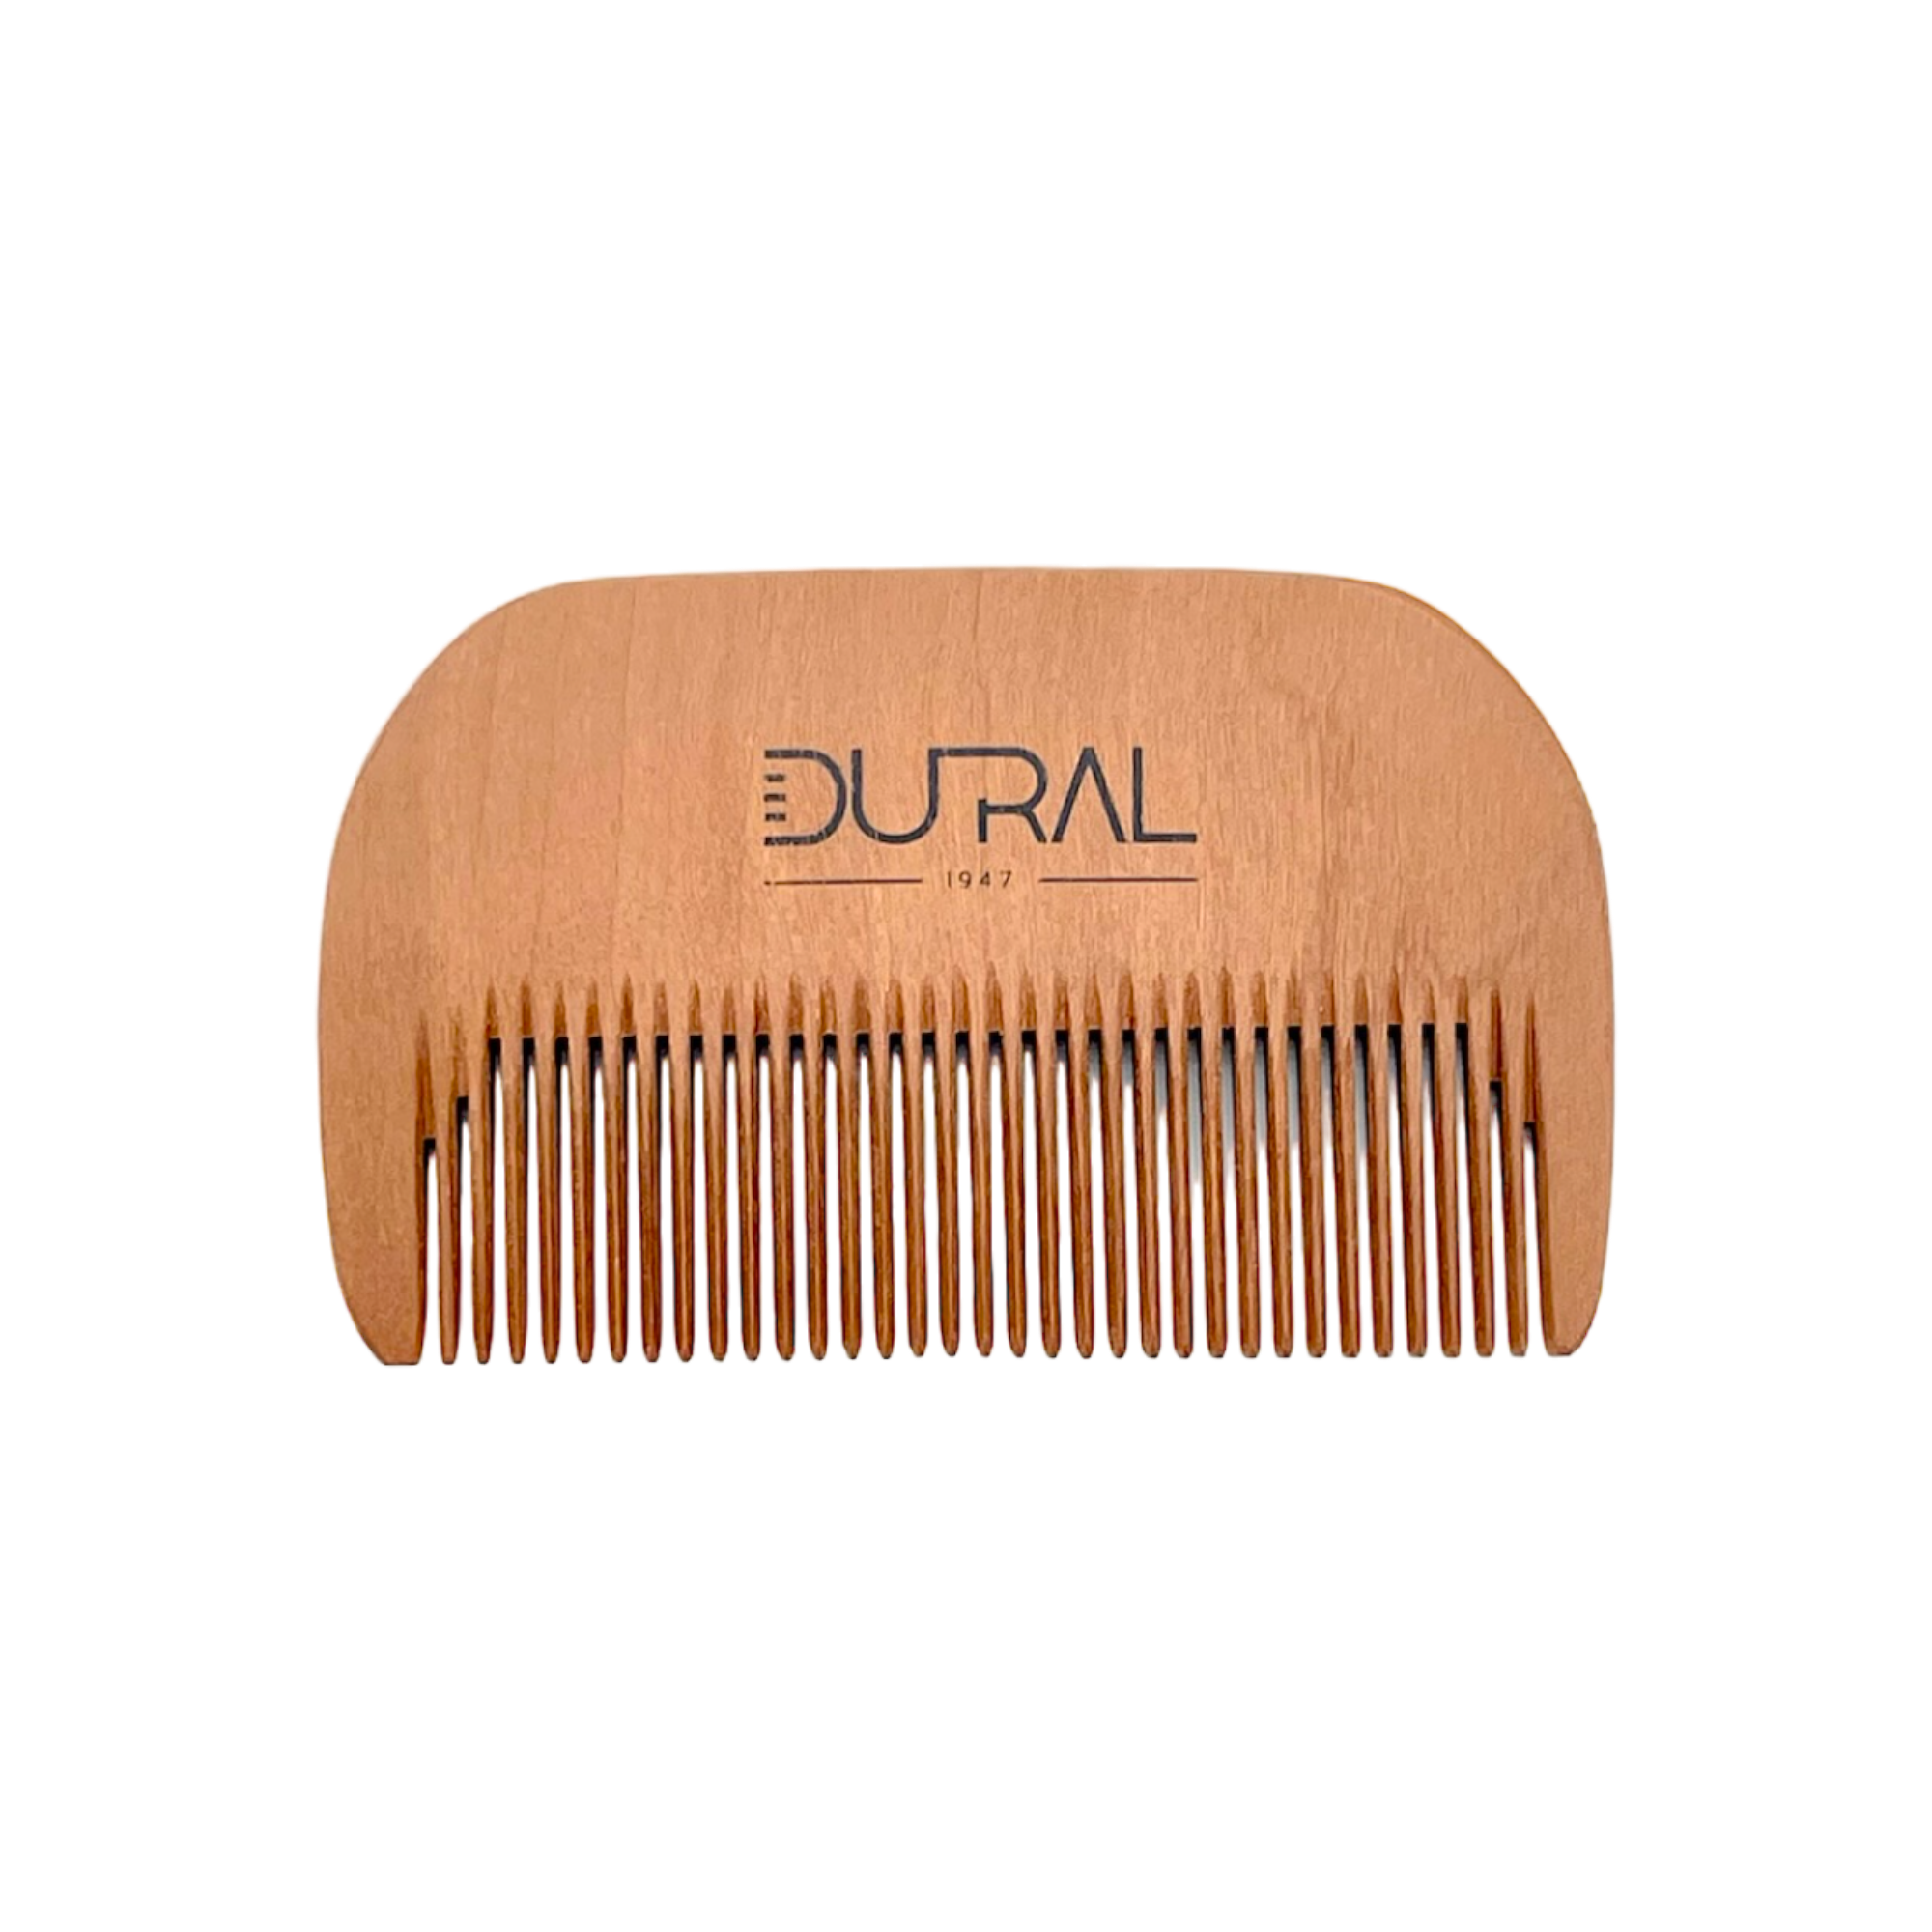 Dural Pear wood hand made beard comb